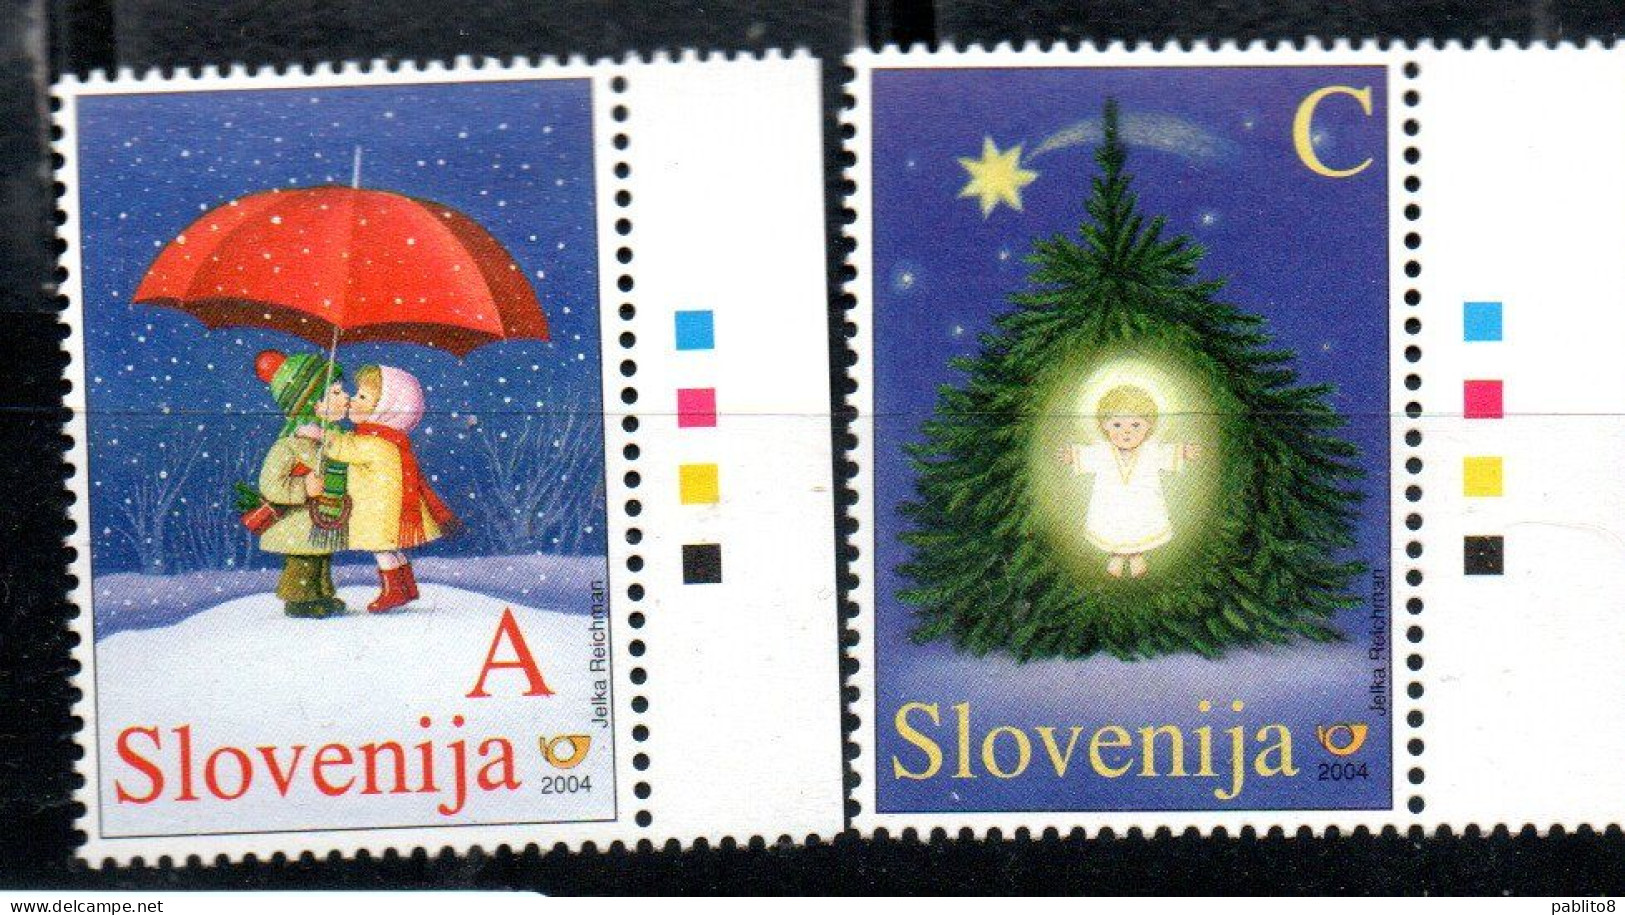 SLOVENIA SLOVENIJA SLOVENIE SLOWENIEN 2004 CHRISTMAS NATALE NOEL WEIHNACHTEN NAVIDAD COMPLETE SET SERIE COMPLETA MNH - Slovénie